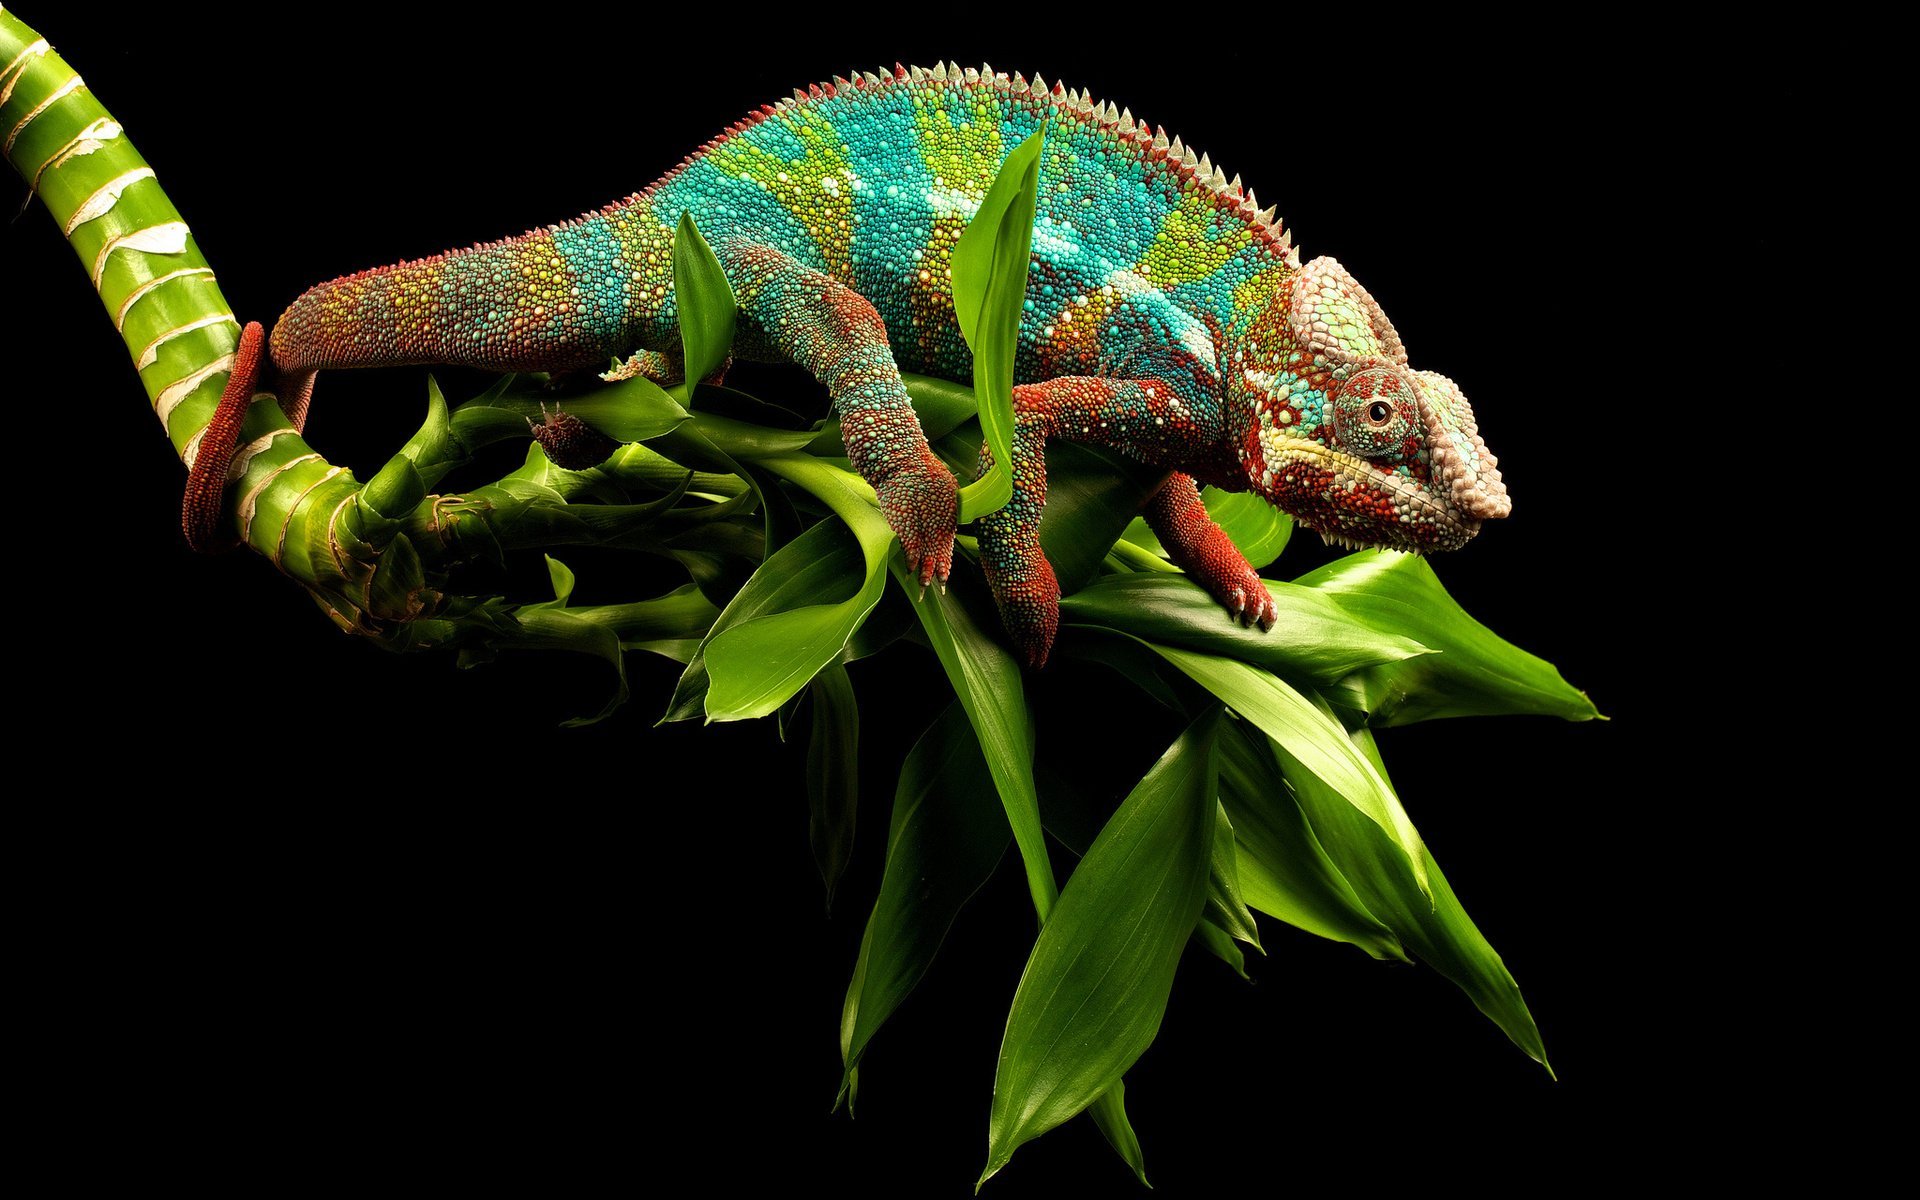 reptile, reptiles, animal, chameleon, close up, green, lizard, plant